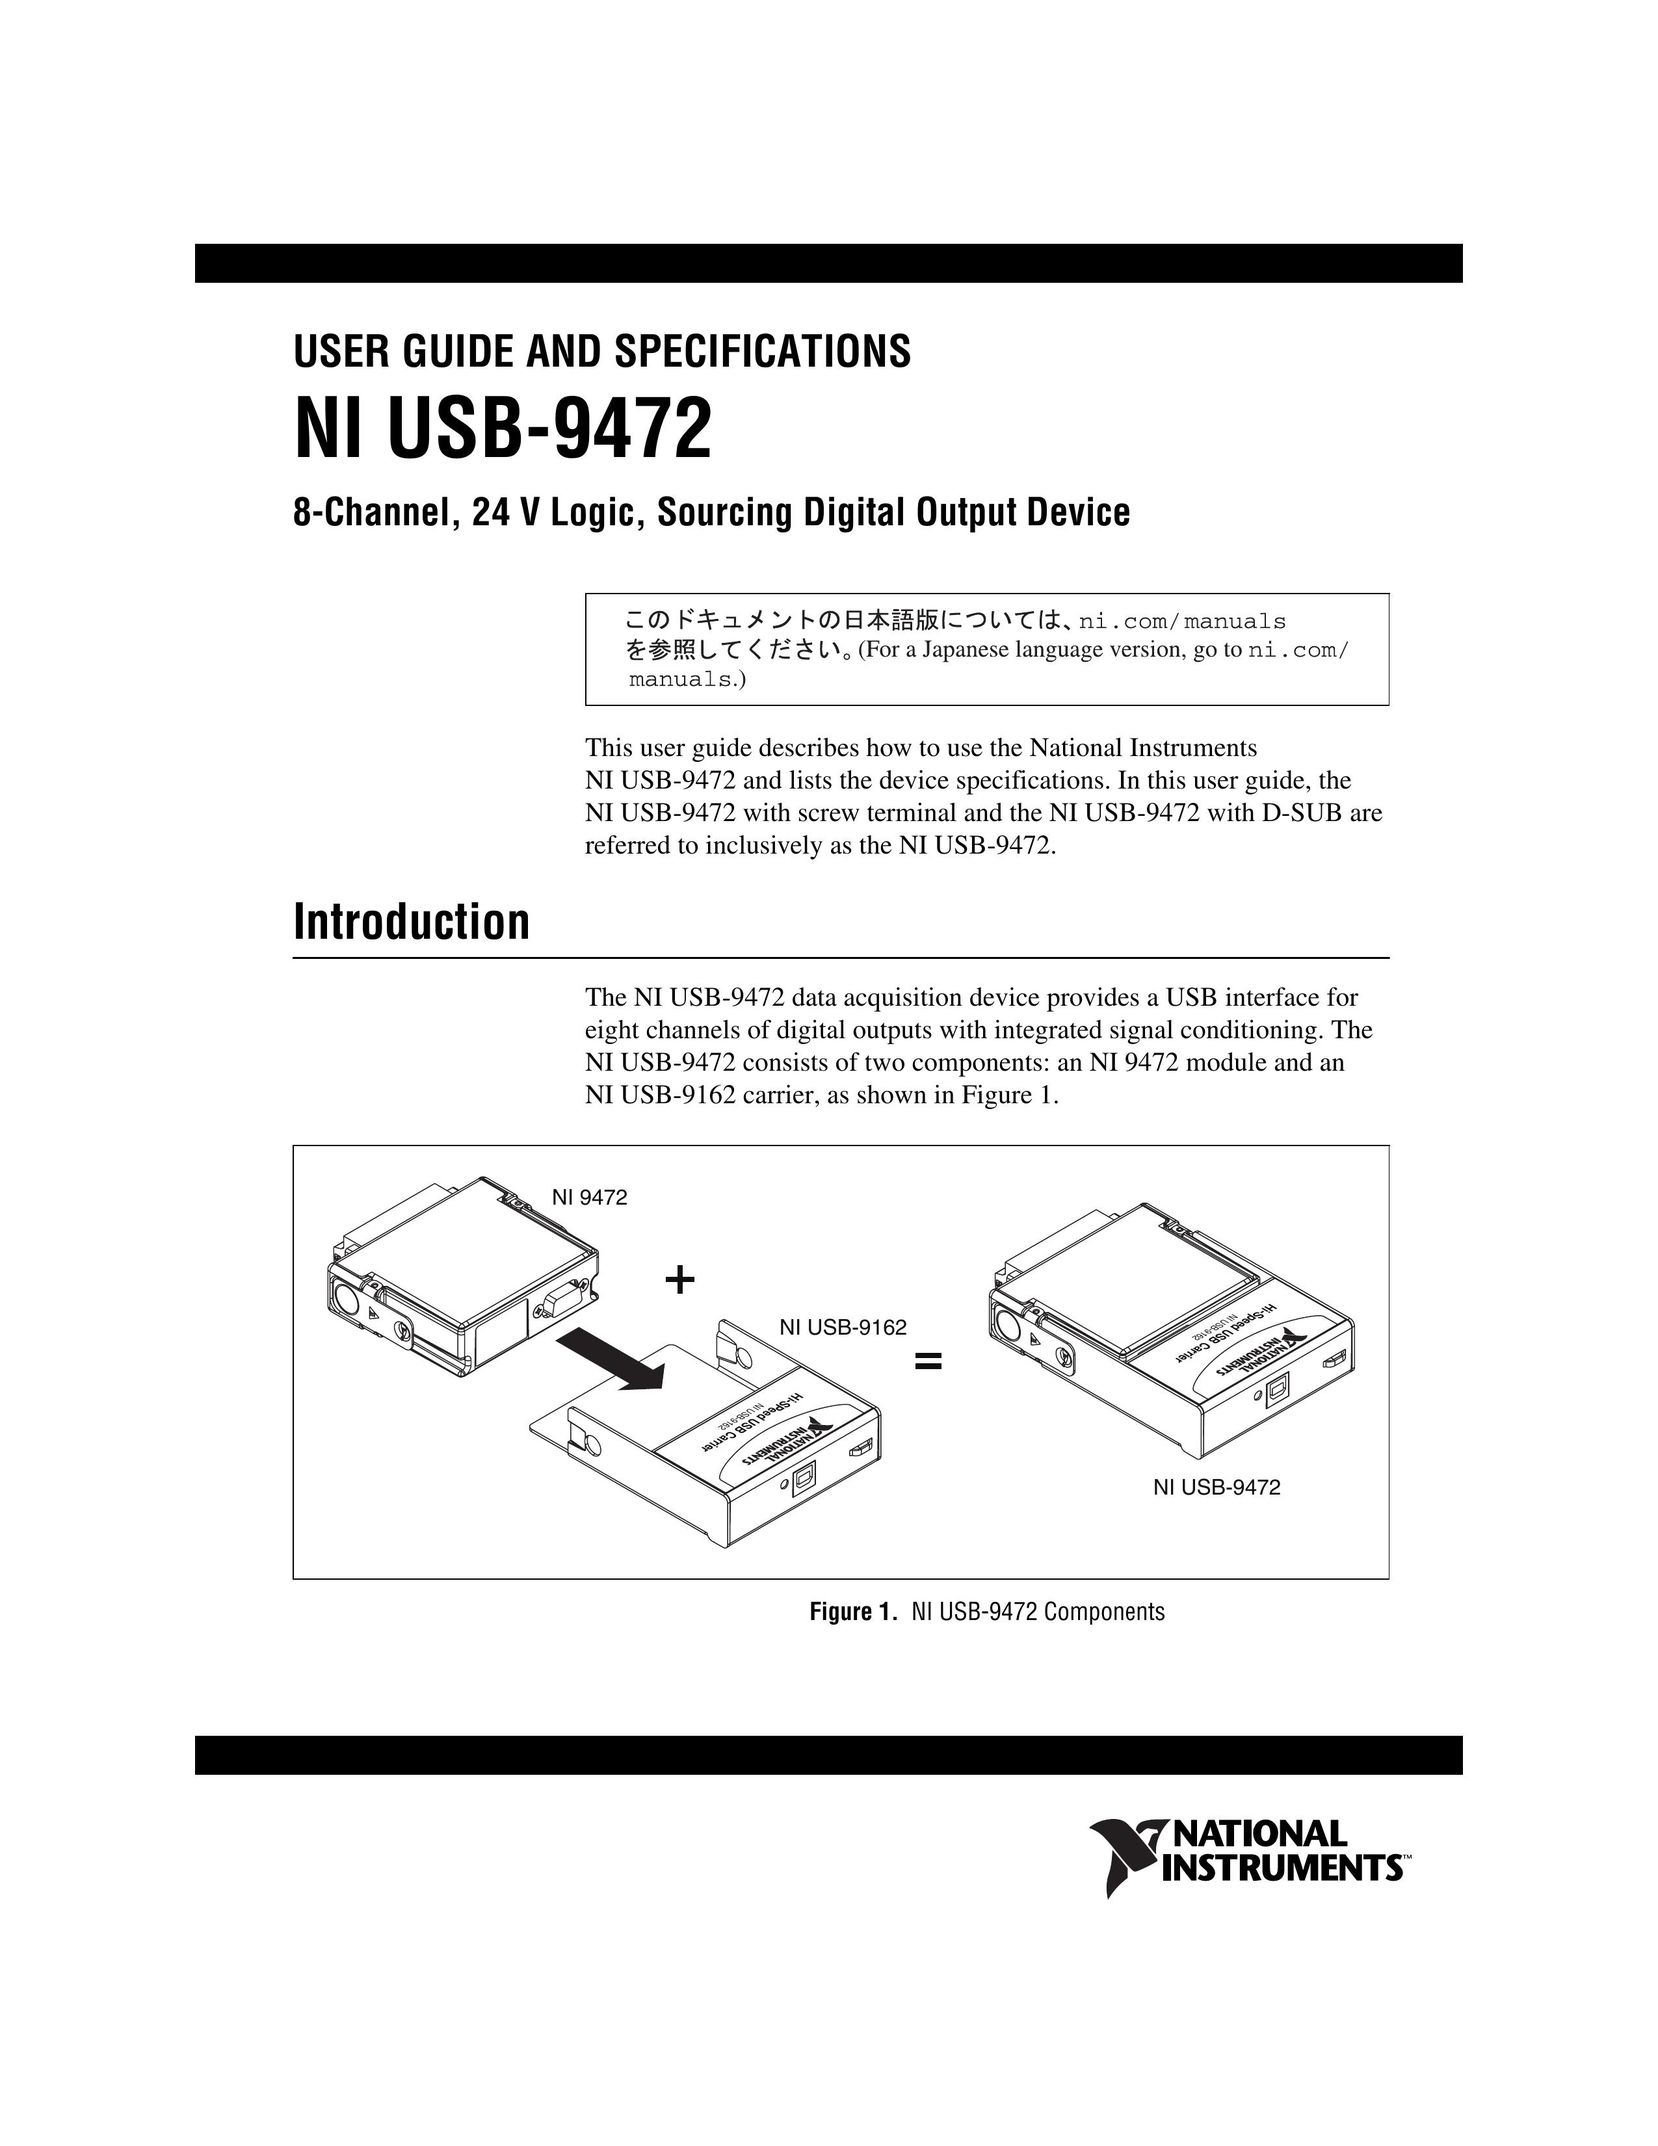 National Instruments NI USB-9472 Printer Accessories User Manual